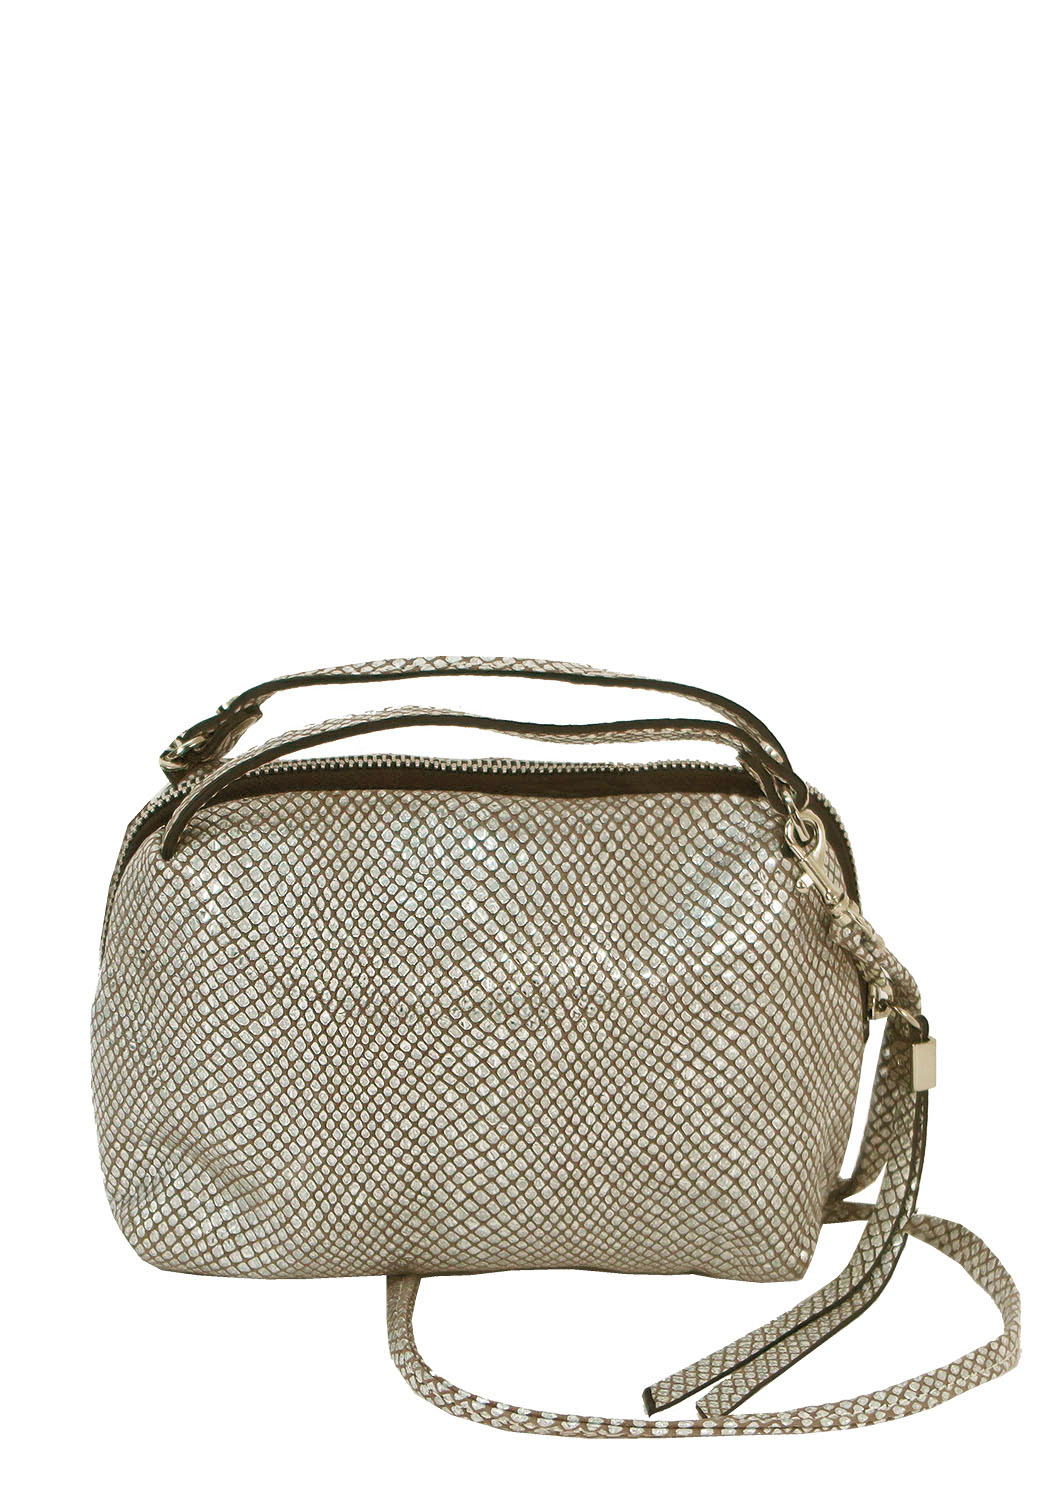 Leather Silver & Taupe Snakeskin Style Cross Body Shoulder Bag – Reign Vintage